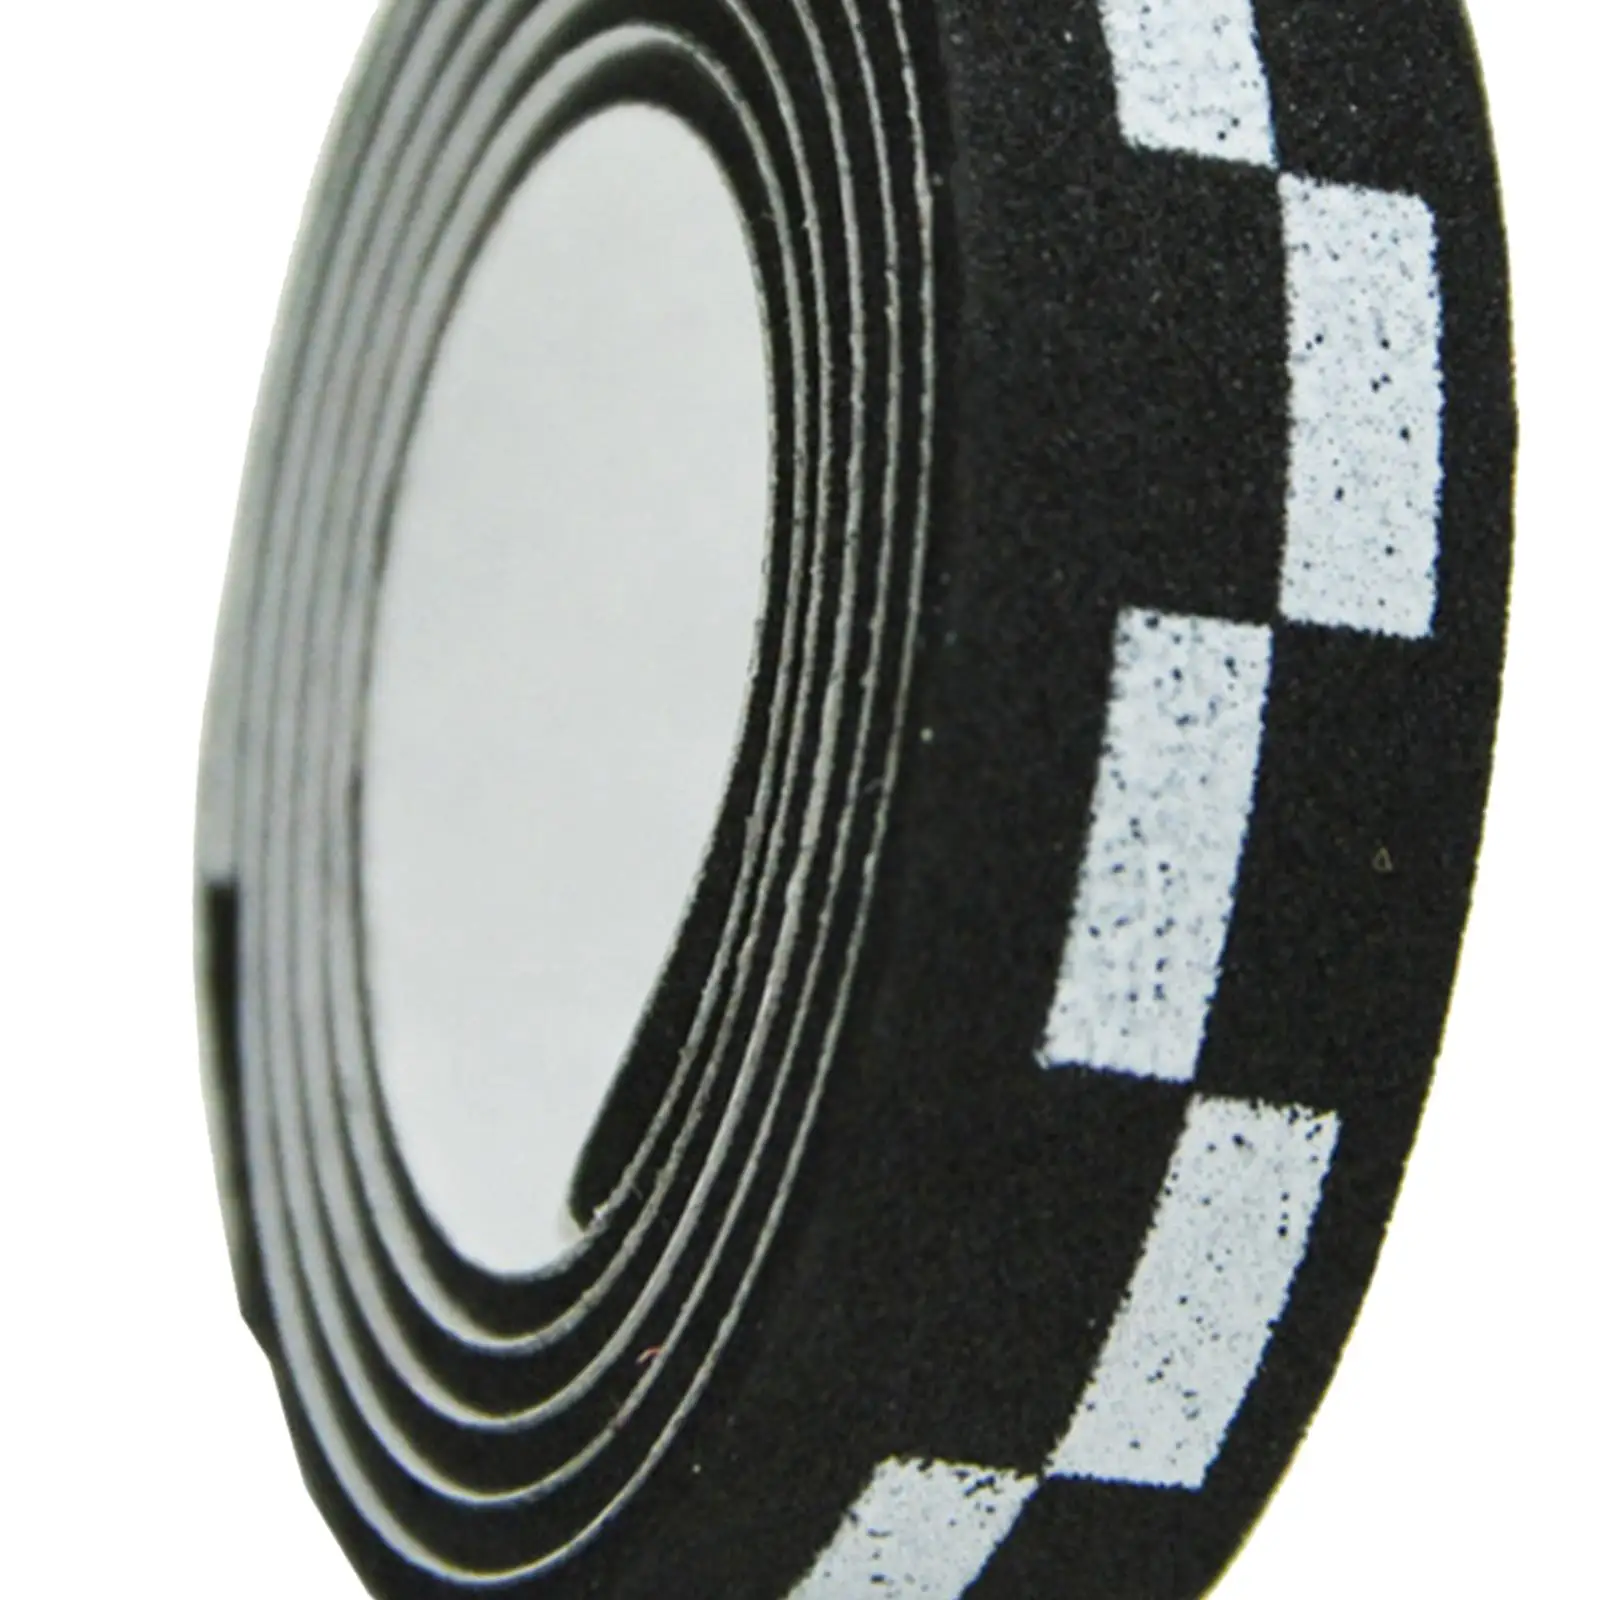 Table Tennis Racket Edge Tape Self Adhesive 10mm Pickleball Paddle Edge Tape Table Tennis Racket Care Accessories